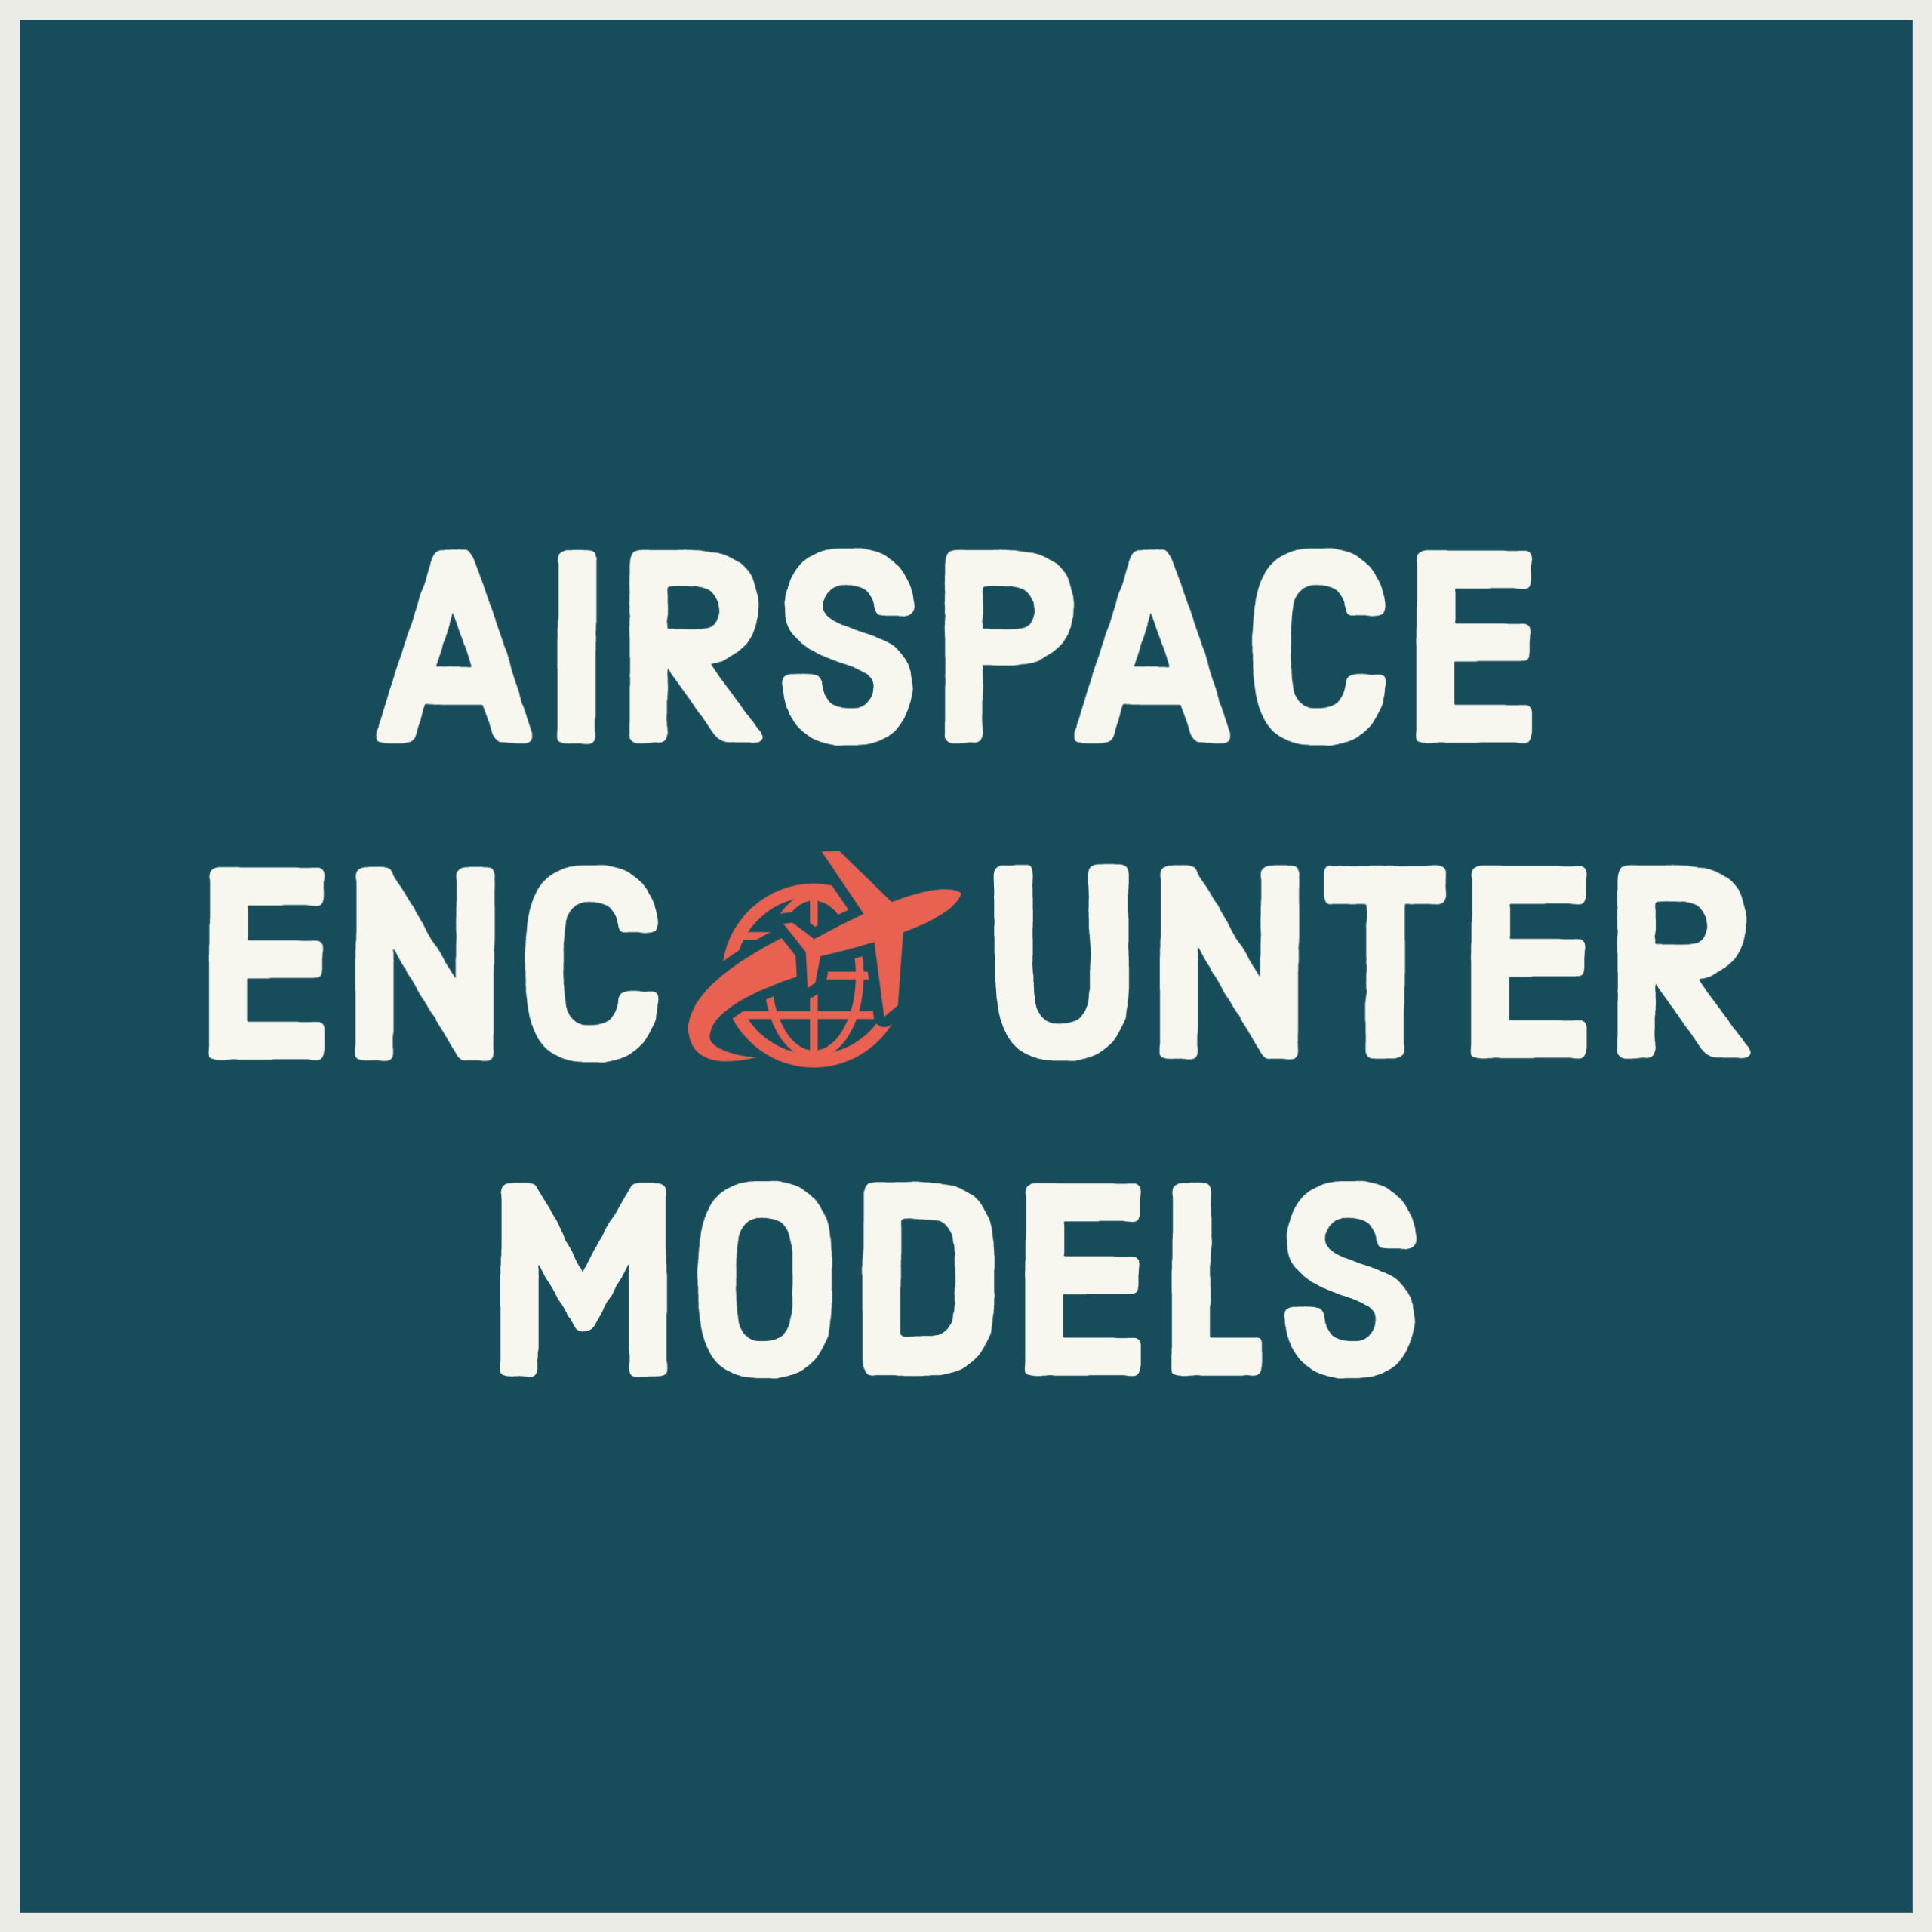 Airspace Encounter Models Team